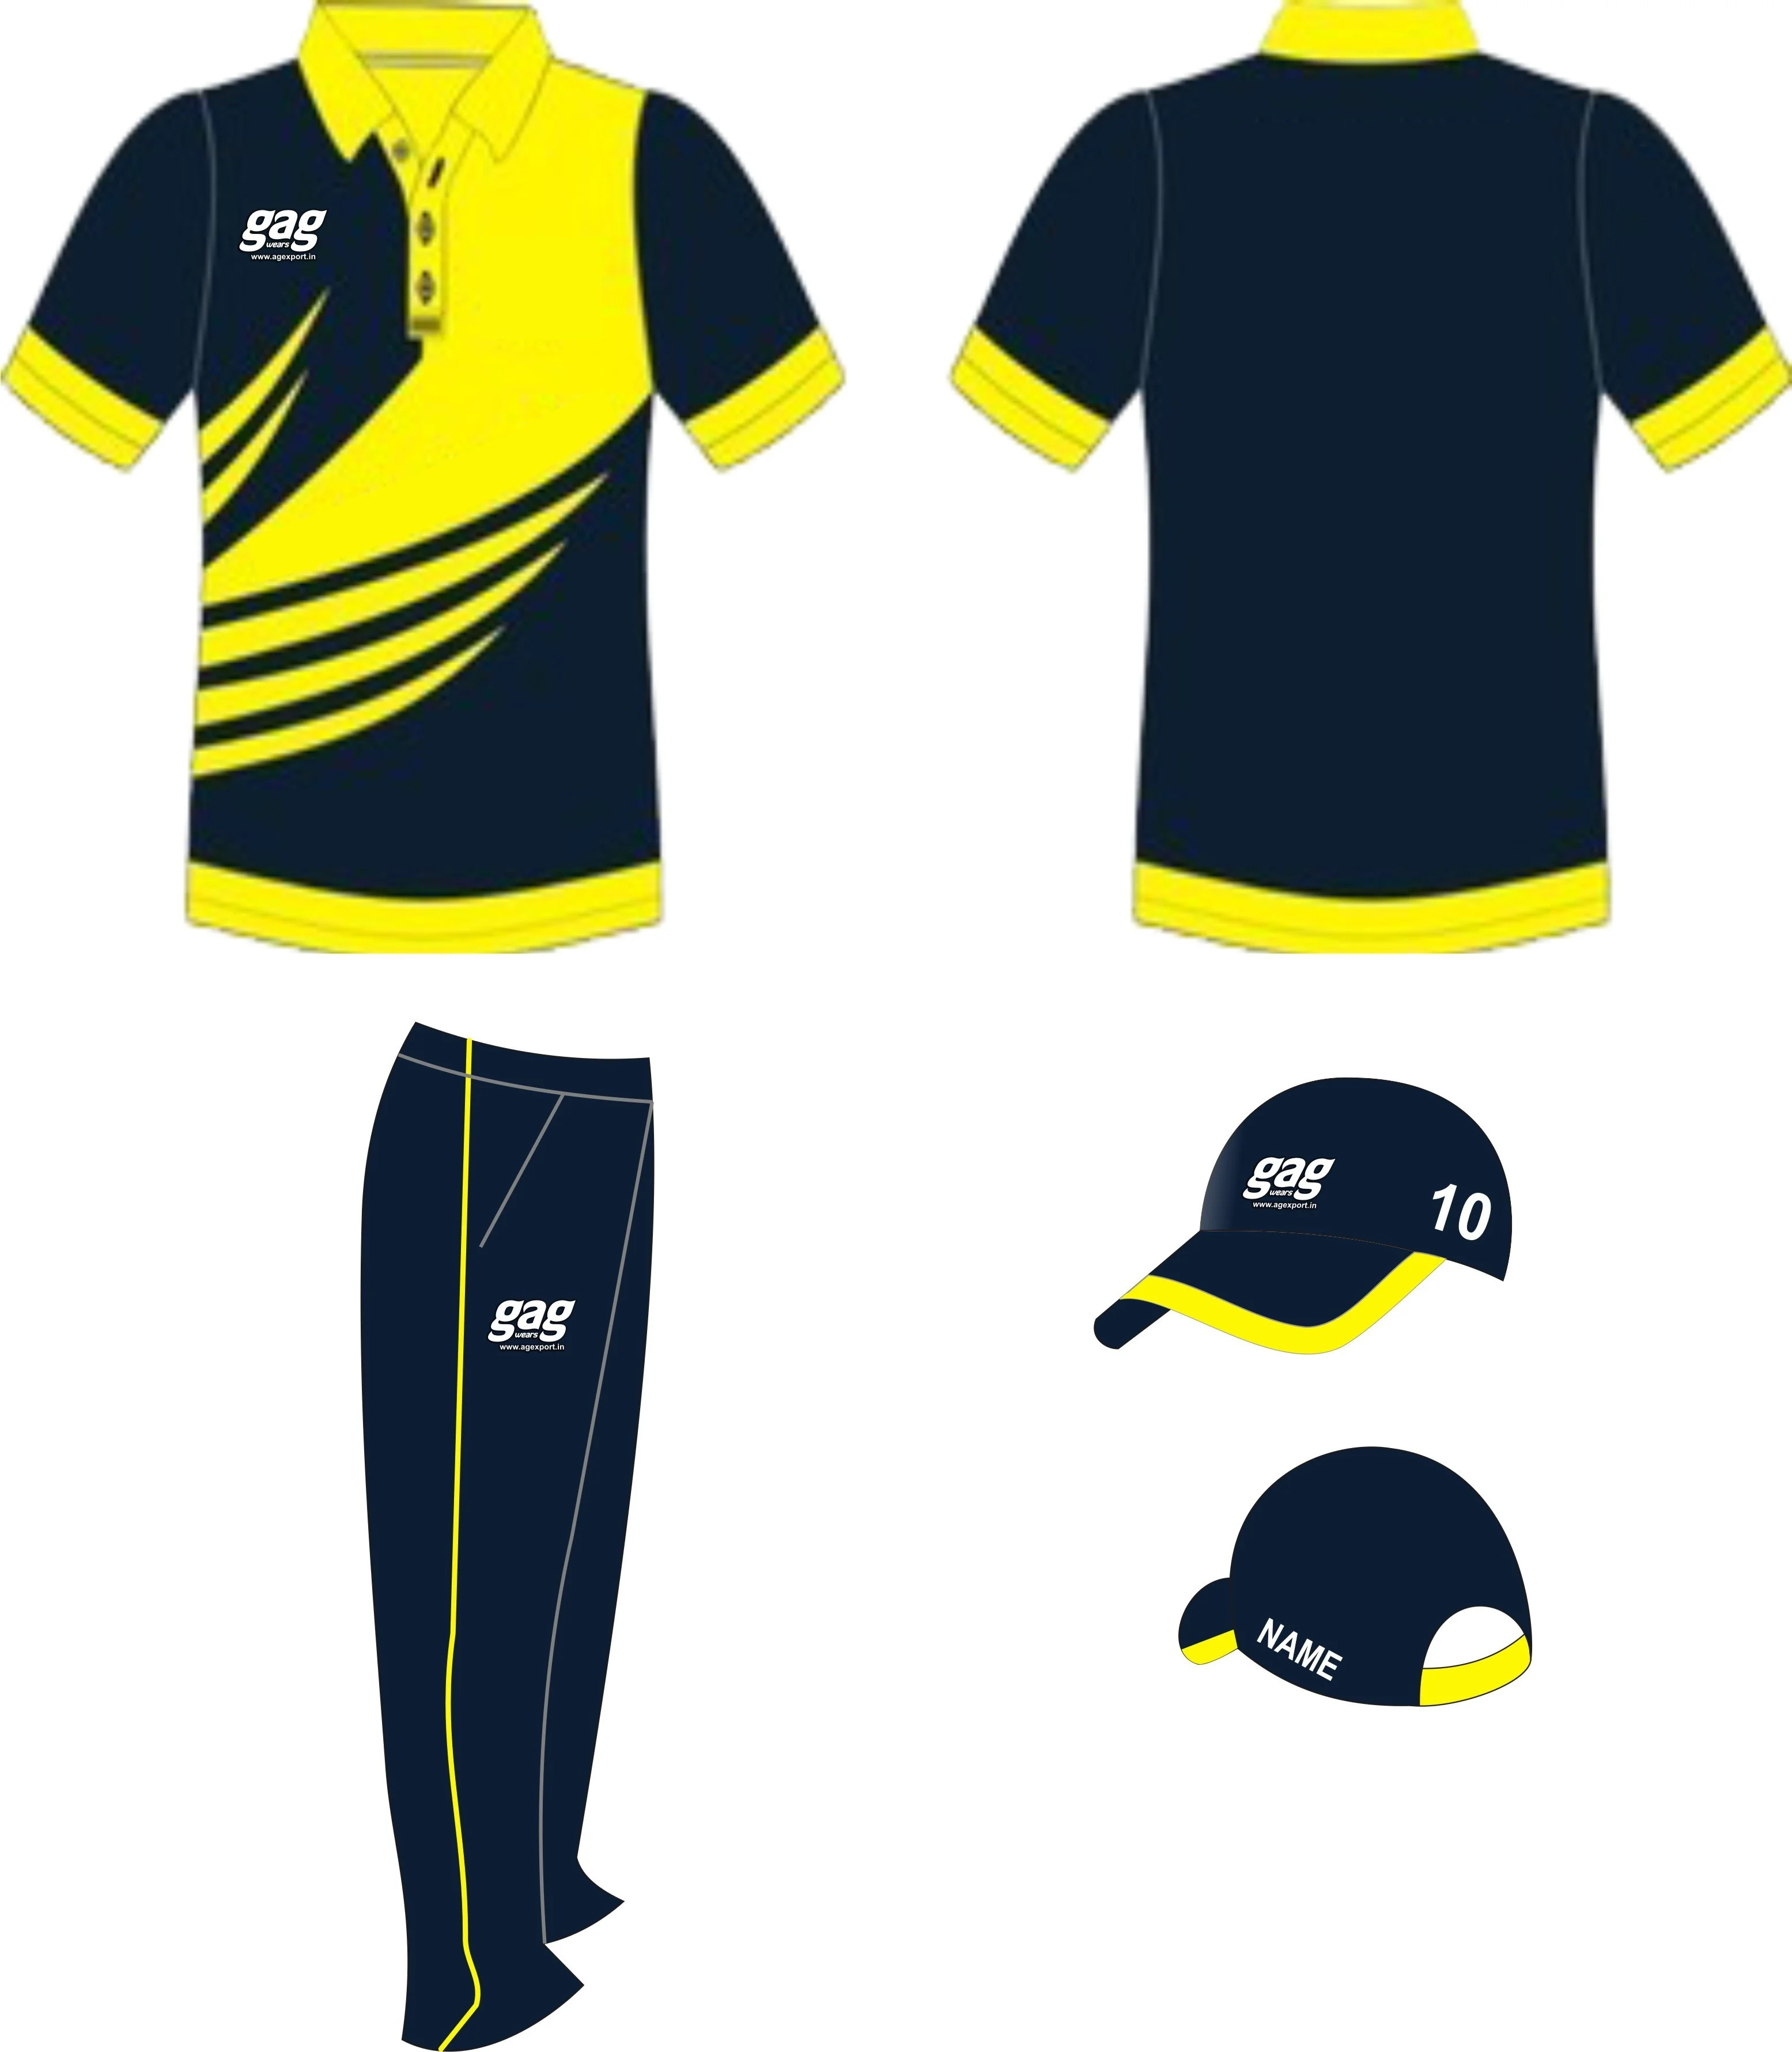 local cricket jersey